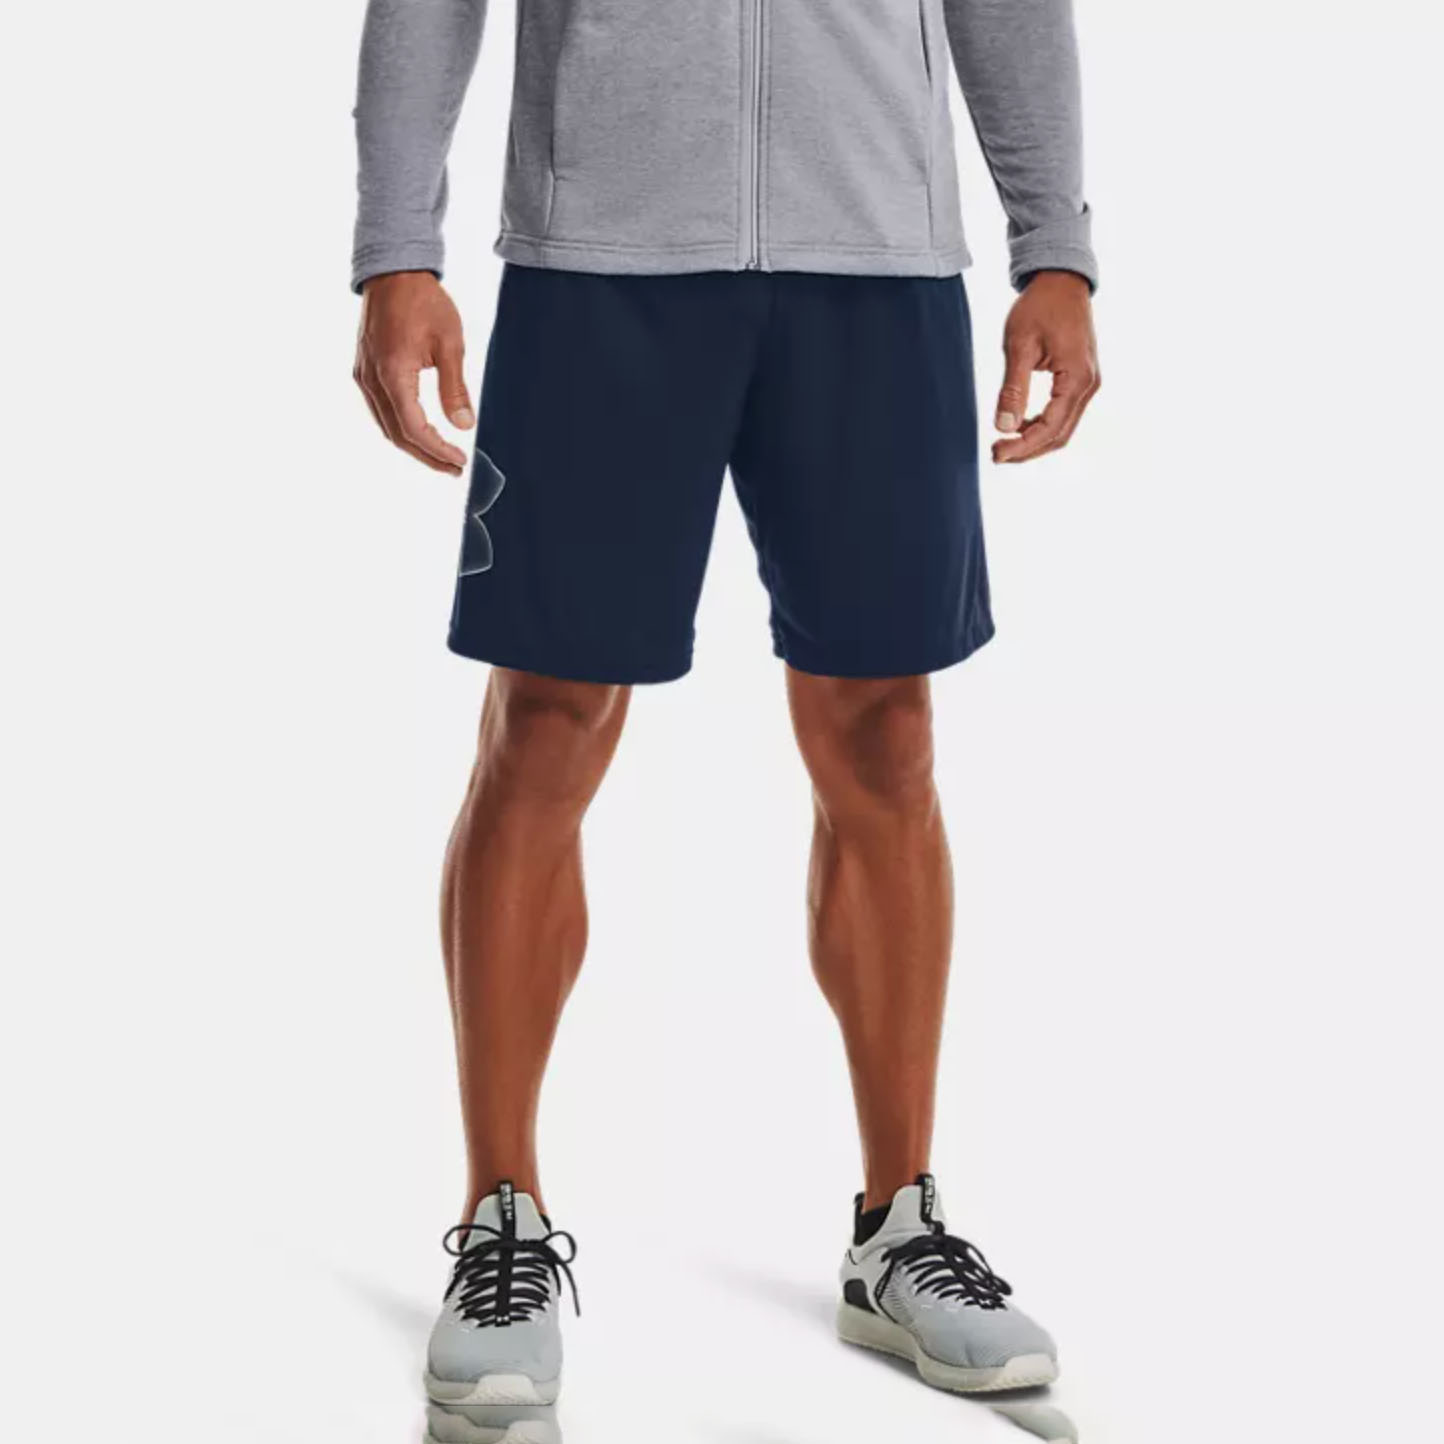 Men in grey sweatshirt and dark blue gym shorts